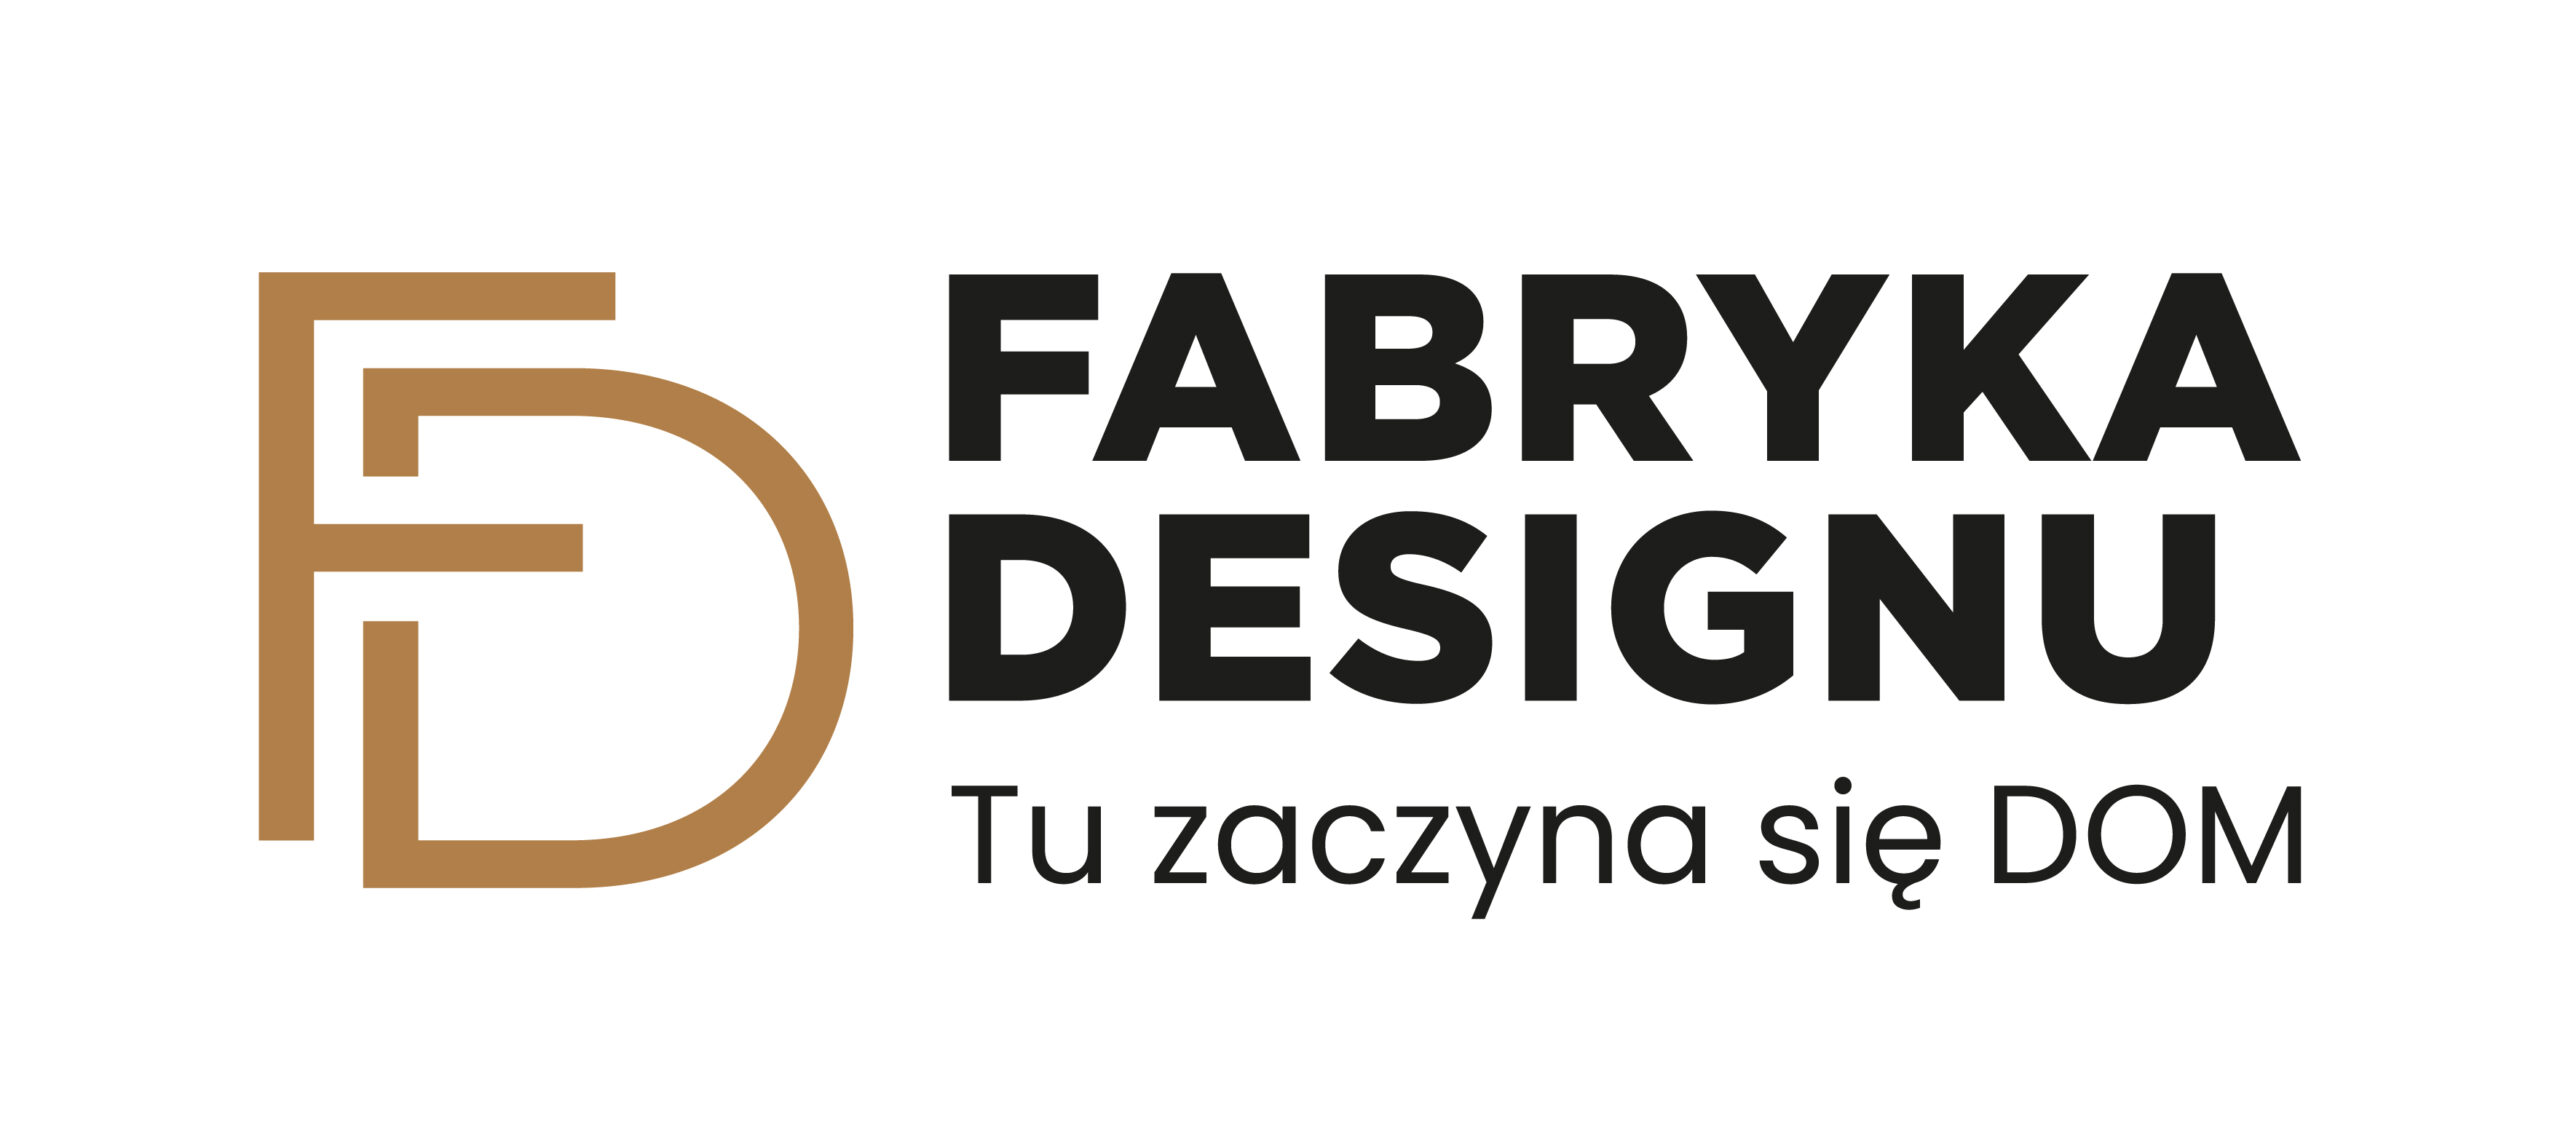 Fabryka Designu